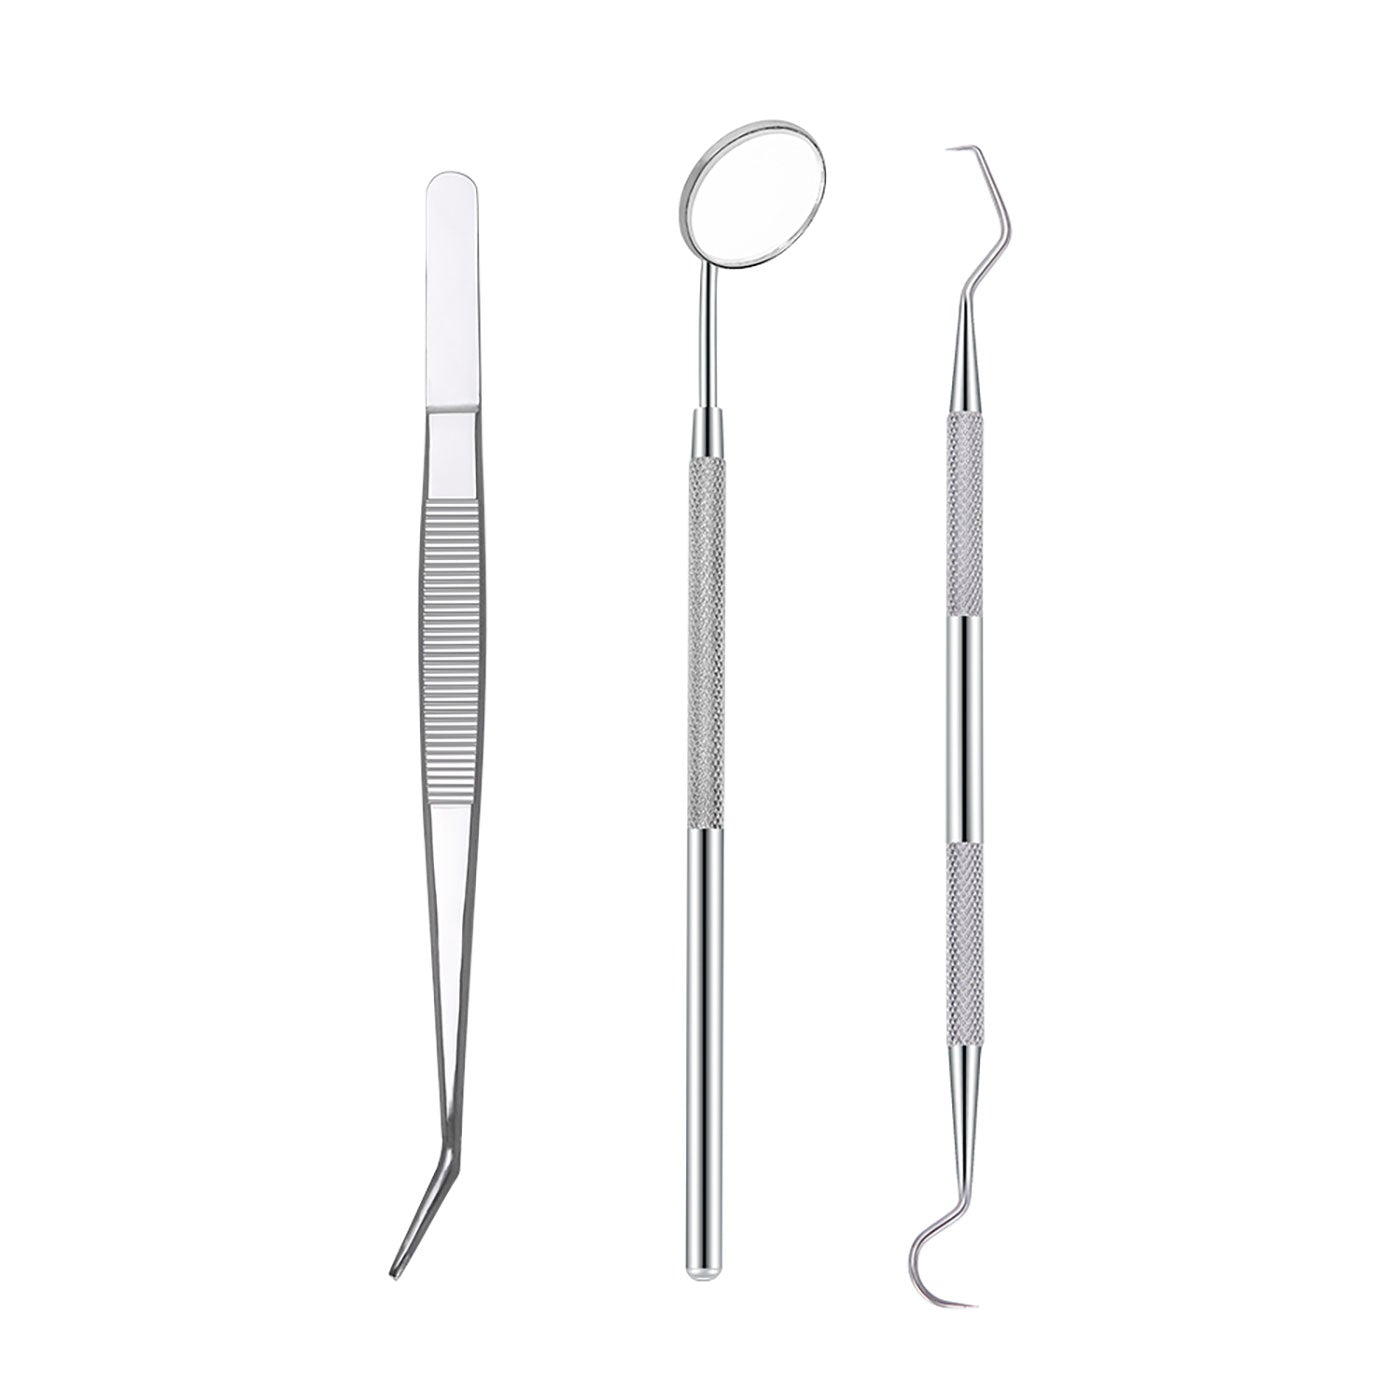 Dental Tools Teeth Cleaning Kit 3pcs/Set - AZDENT